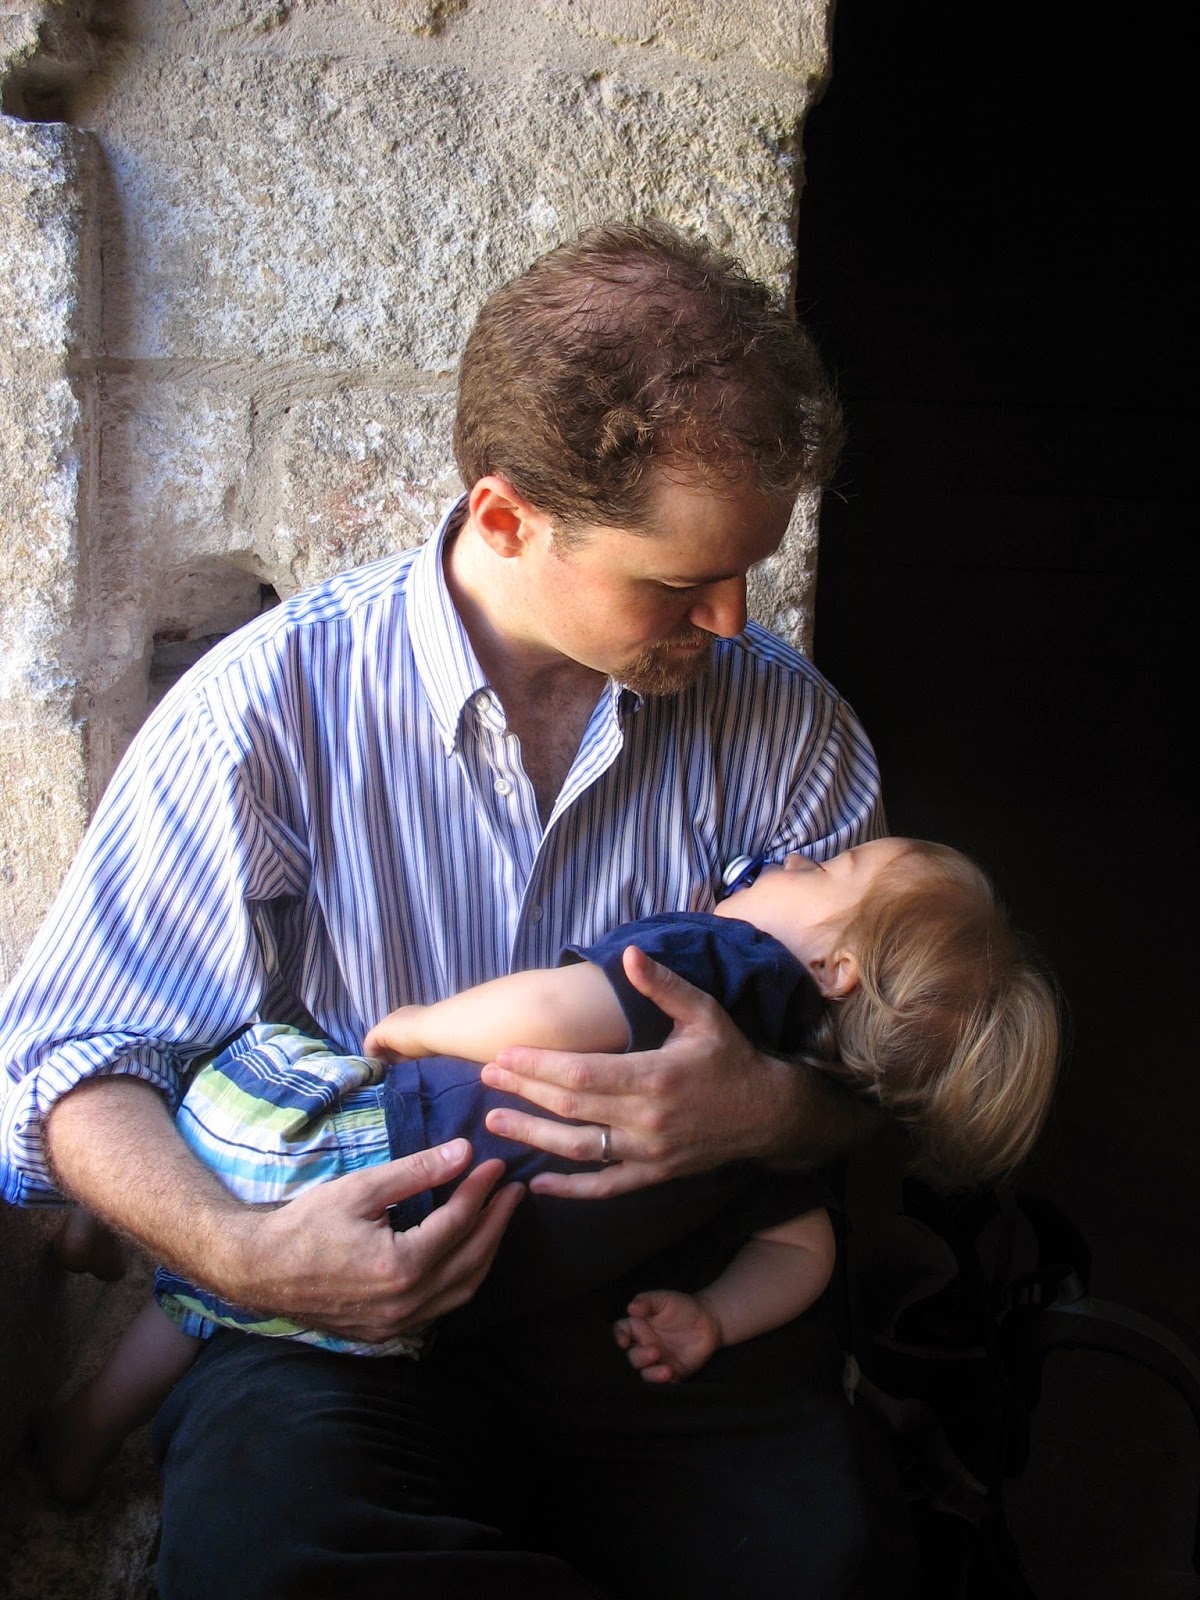 David holding his son